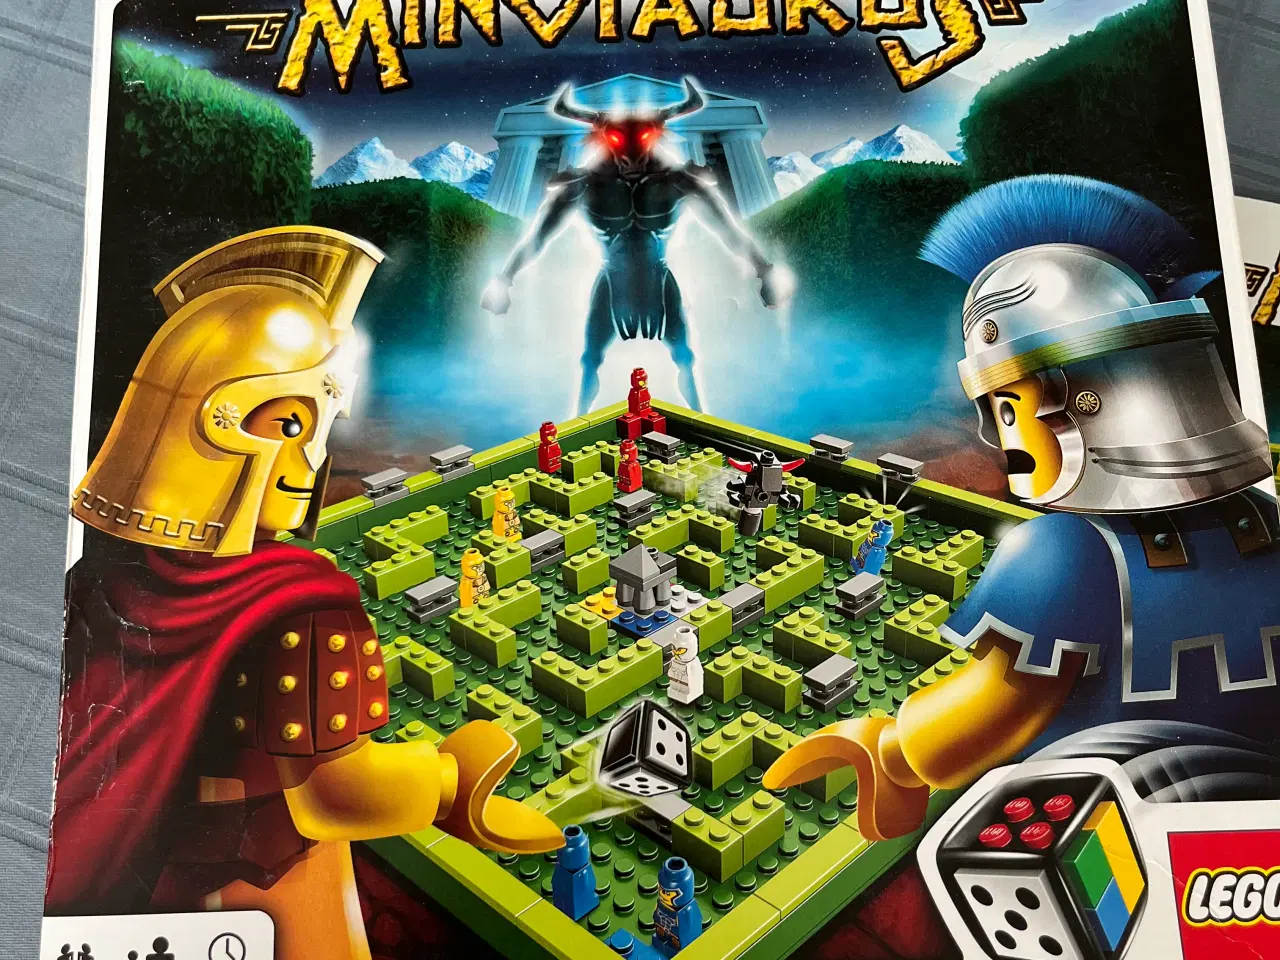 Billede 3 - Lego-spil, Minotaurus